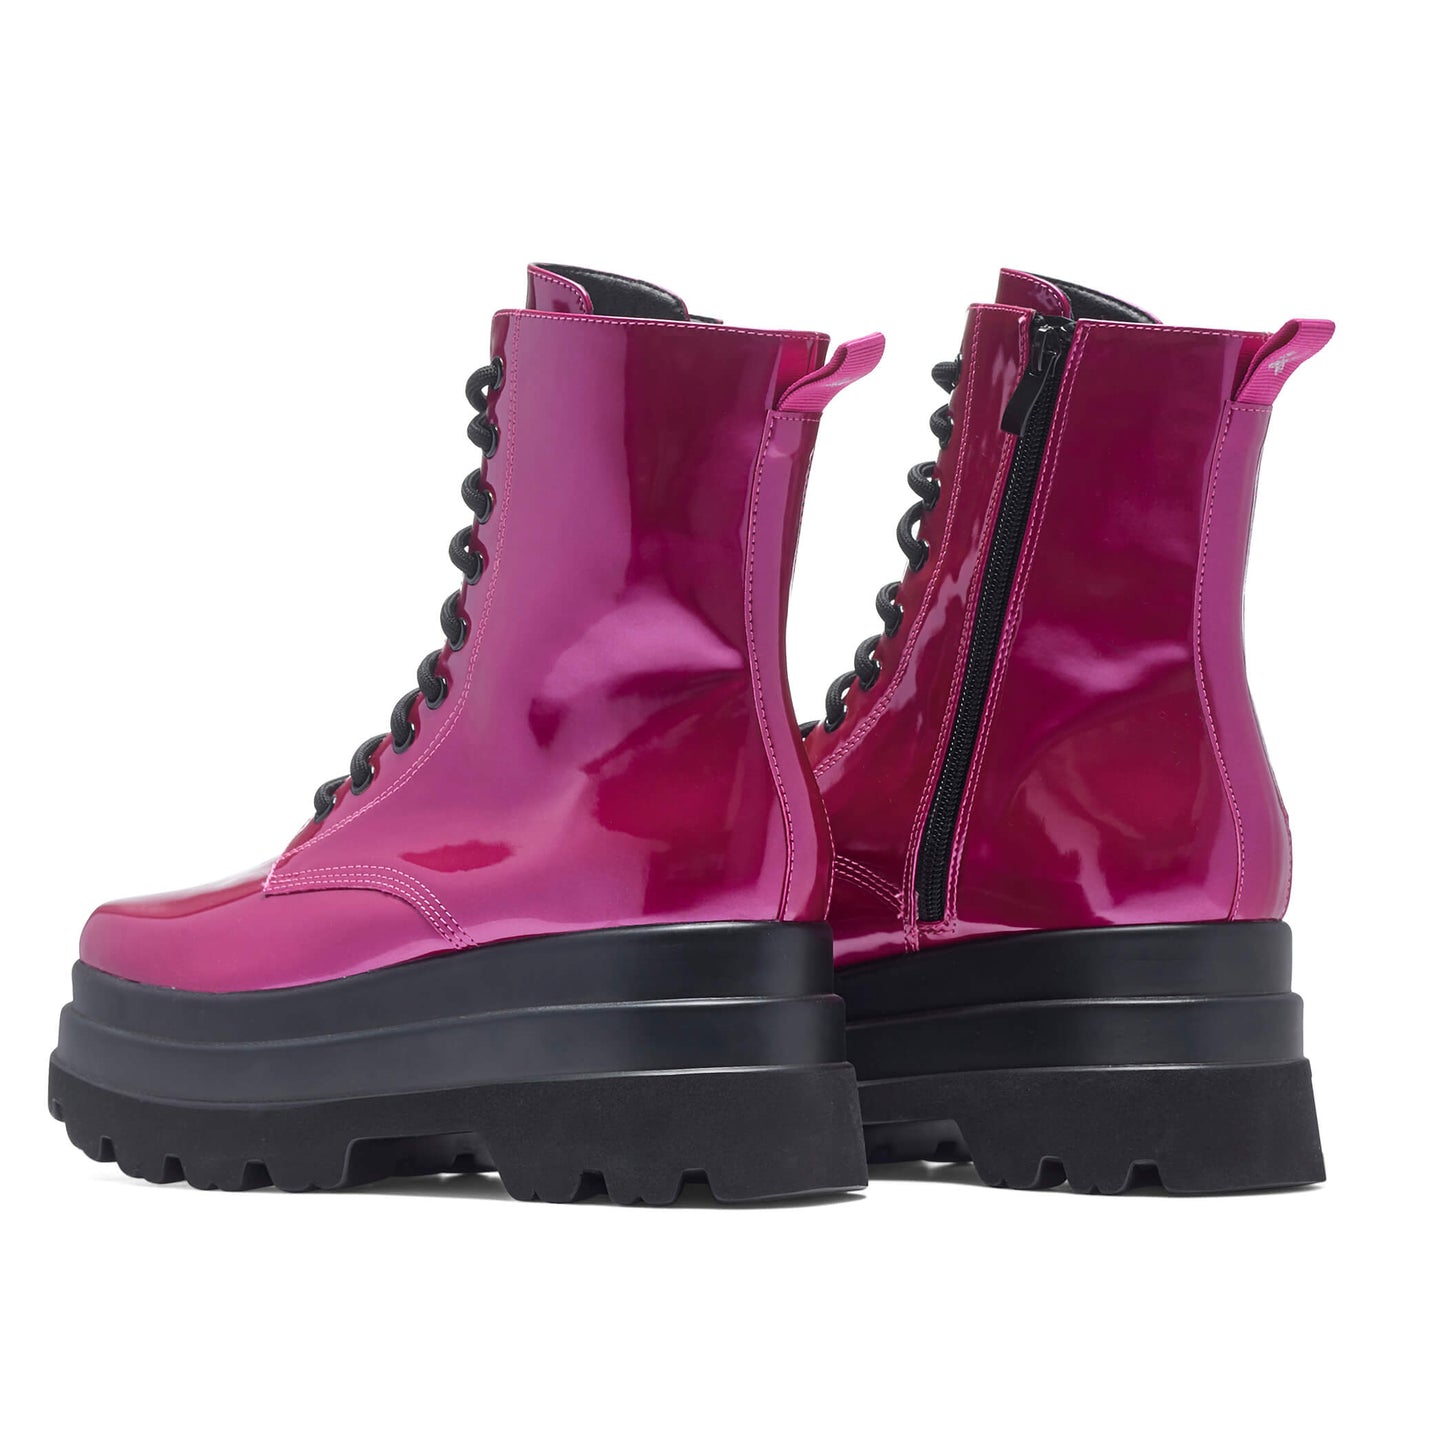 Deathwatch Trident Platform Boots - Candy Pink - KOI Footwear - Back View